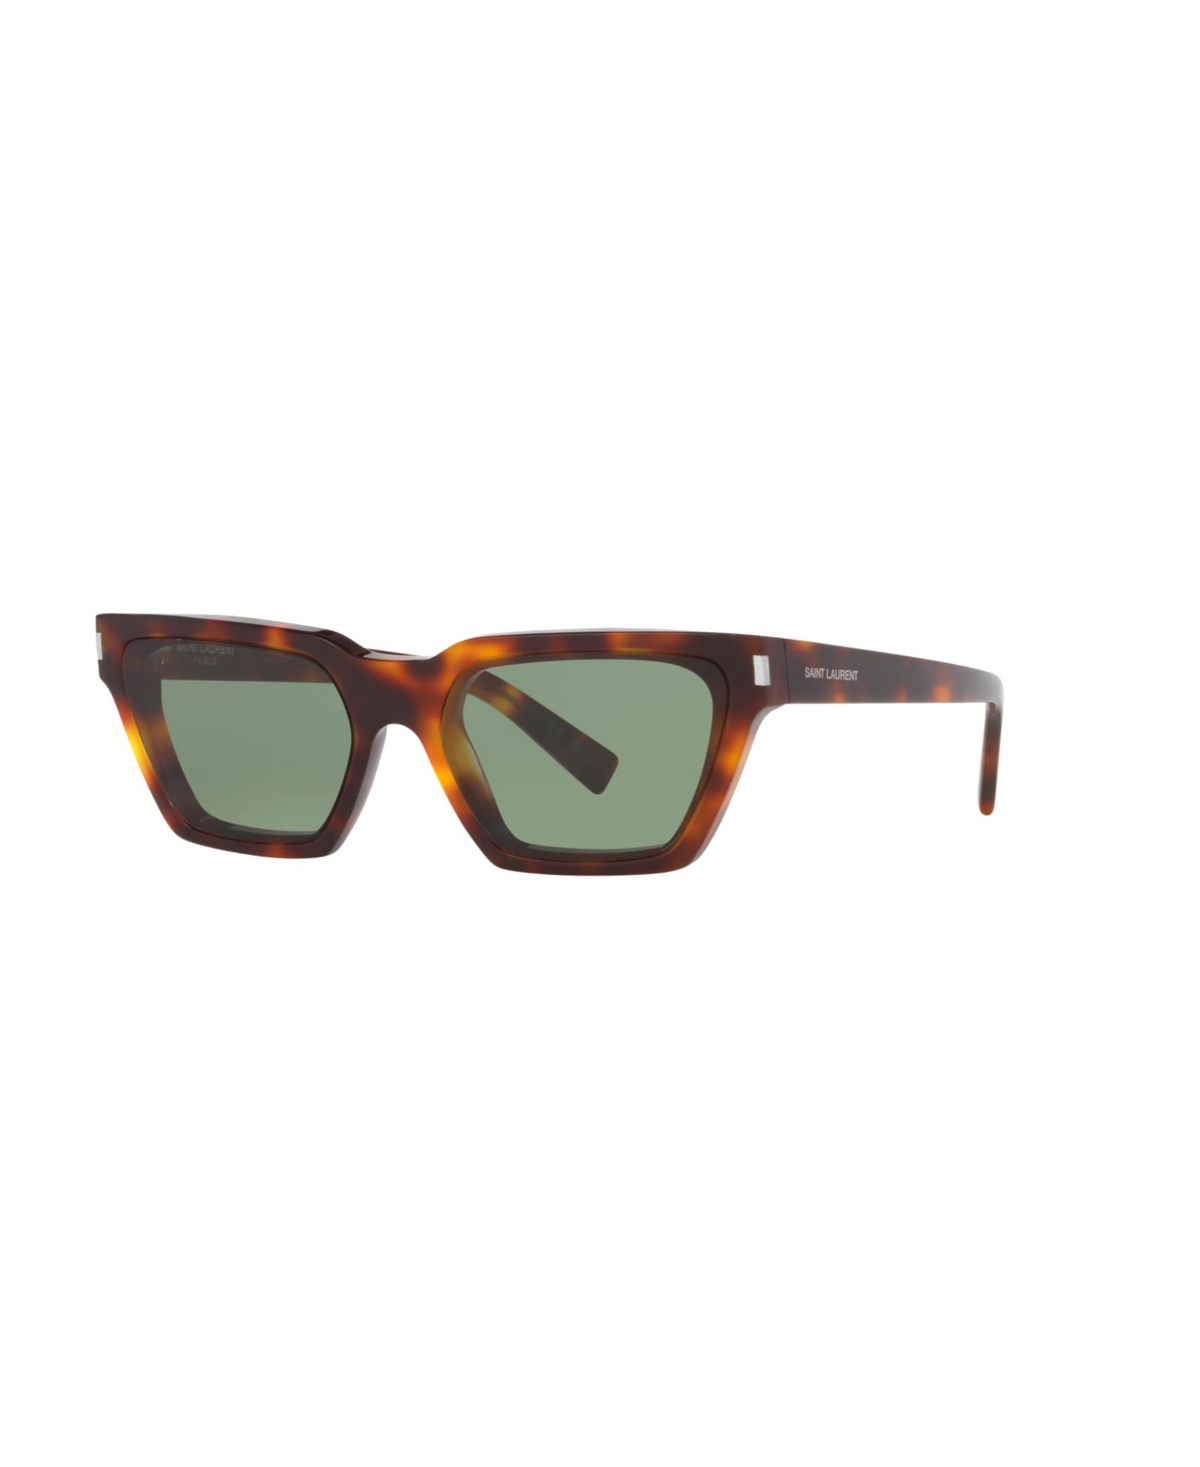 Women's Sunglasses, Sl 633 Ys000516 - Tortoise